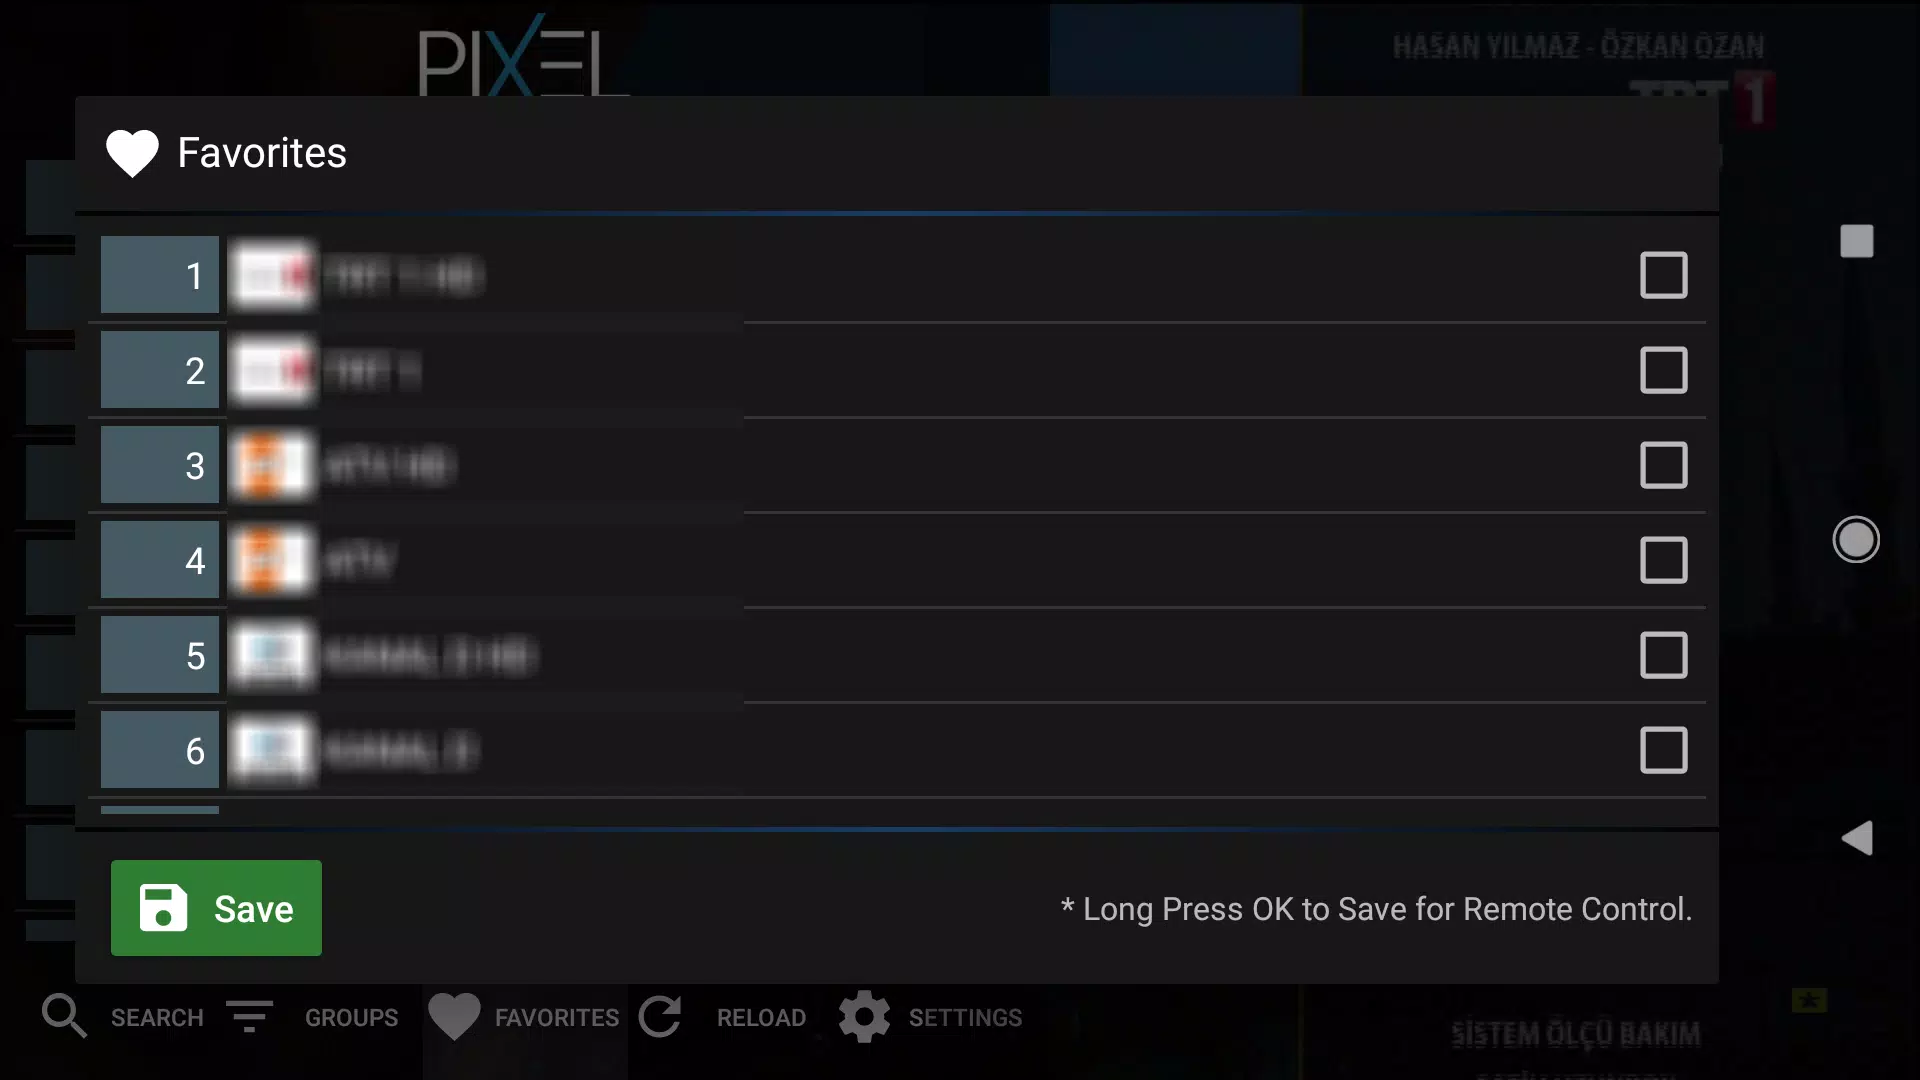 Pixel Smart IPTV APK for Android Download